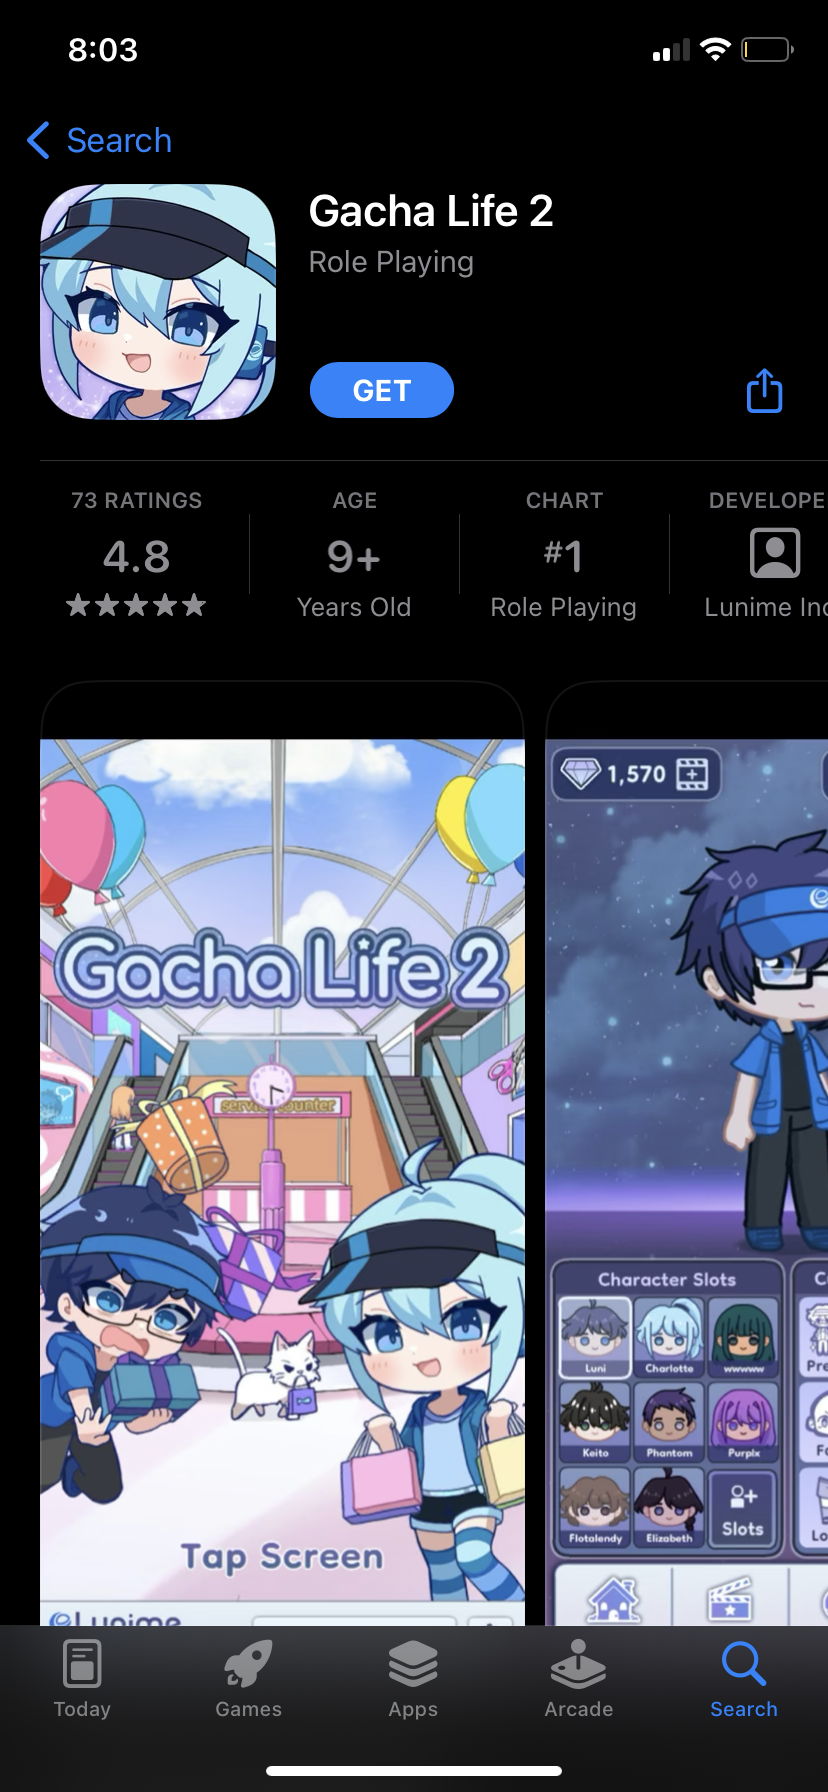 Gacha Life Movie Maker na App Store